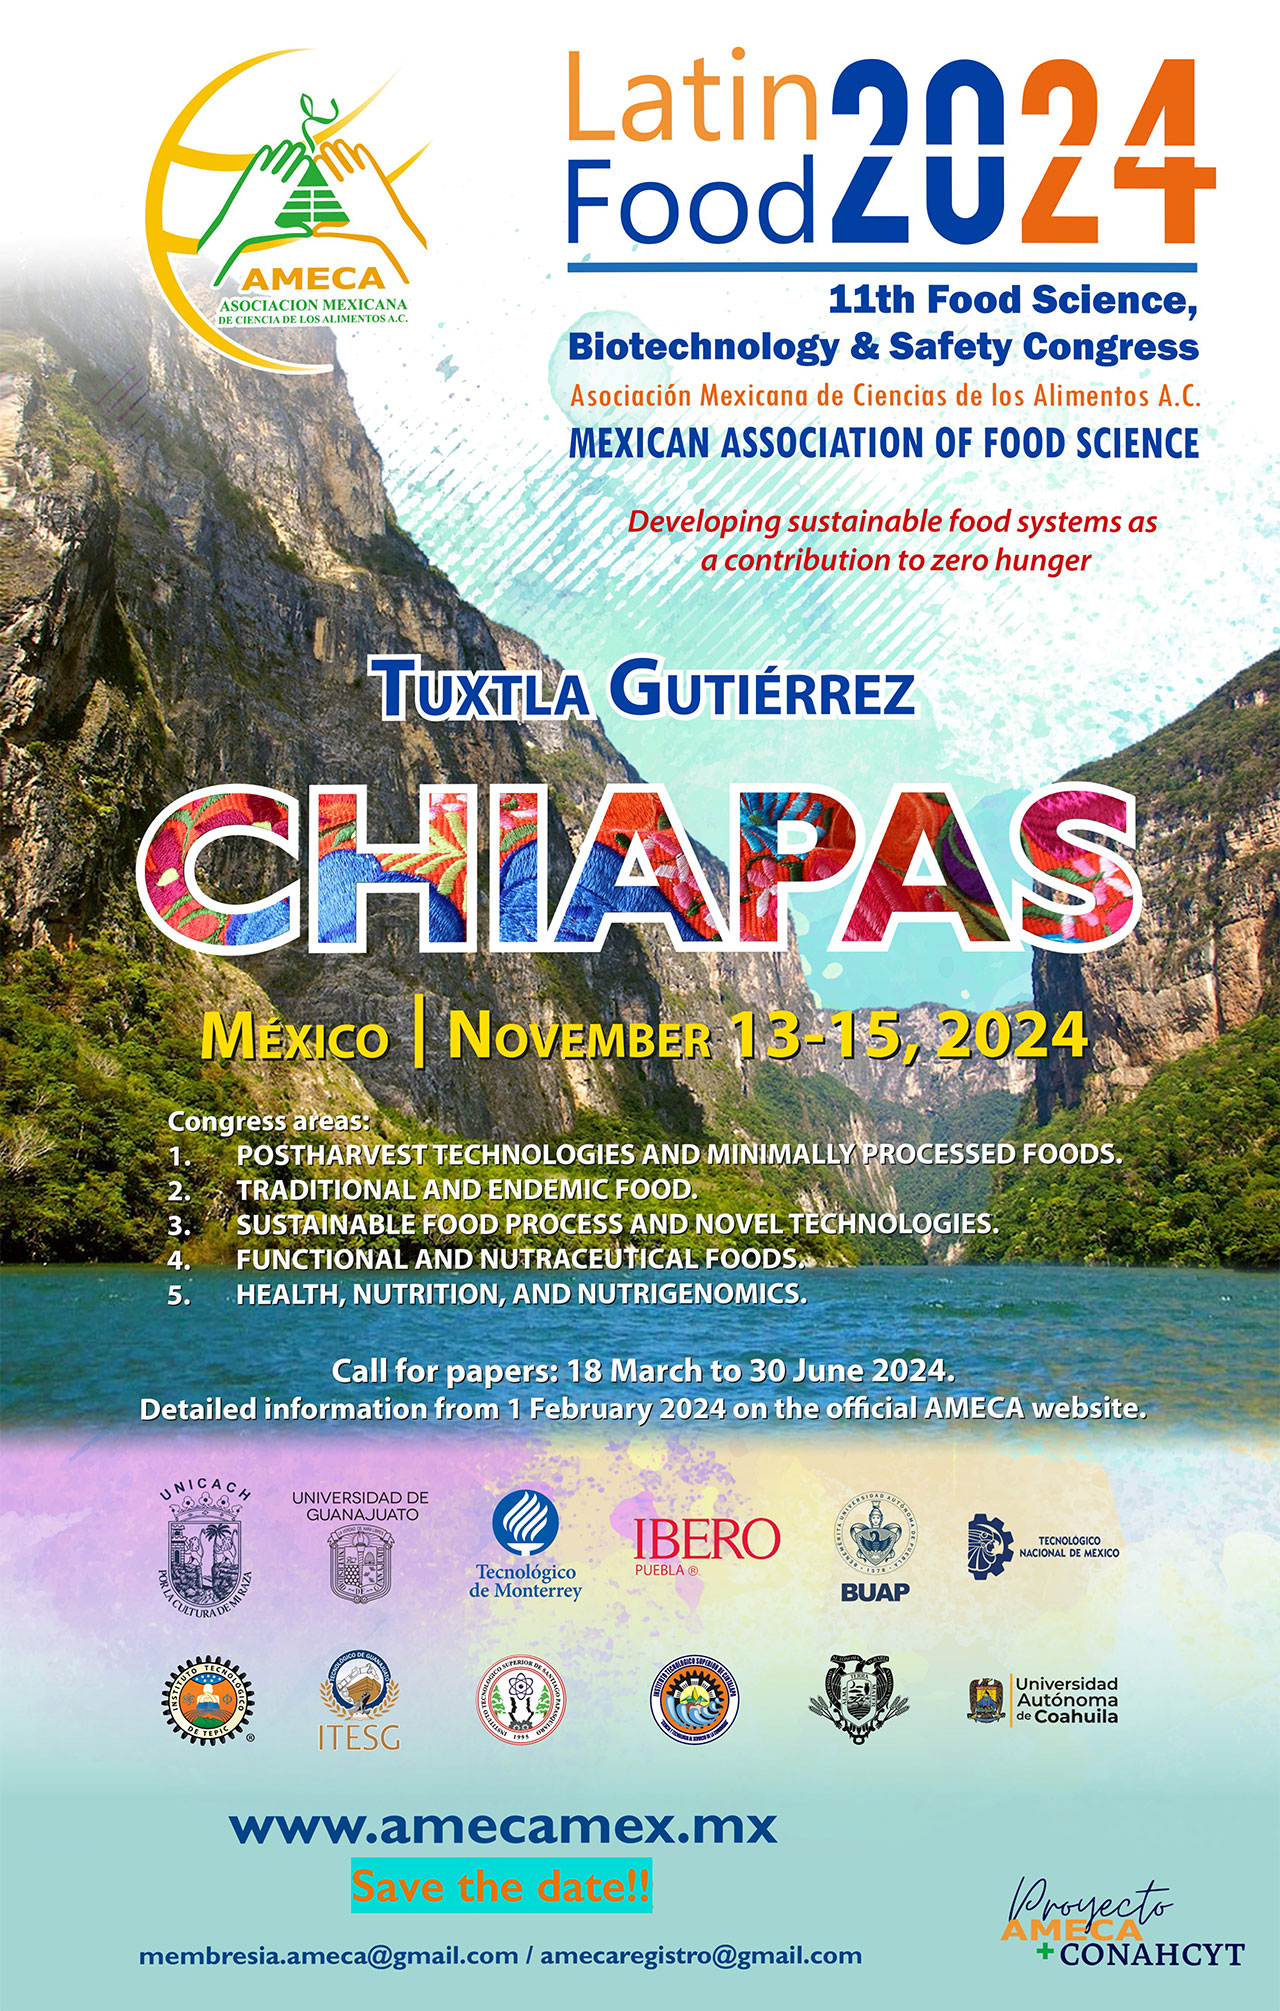 Latin Food 2024, 11th Food Science, Biotechnology & Safety Congress Chiapas - 13 al 15 de noviembre - Save the Date - AMECA, AC